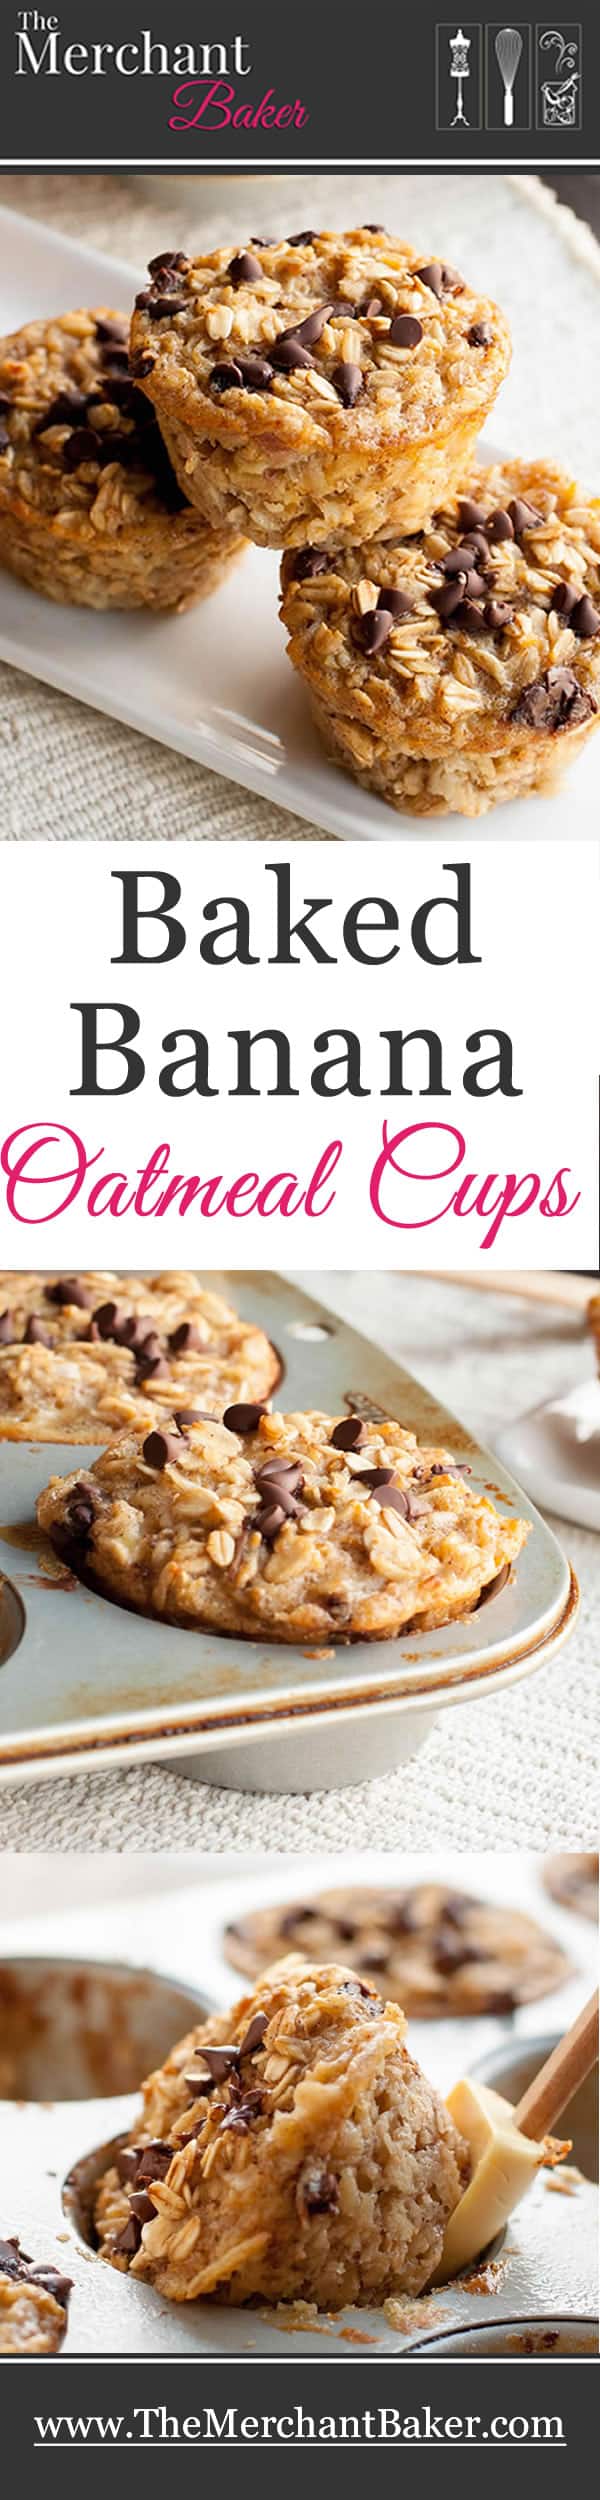 Baked Banana Oatmeal Cups